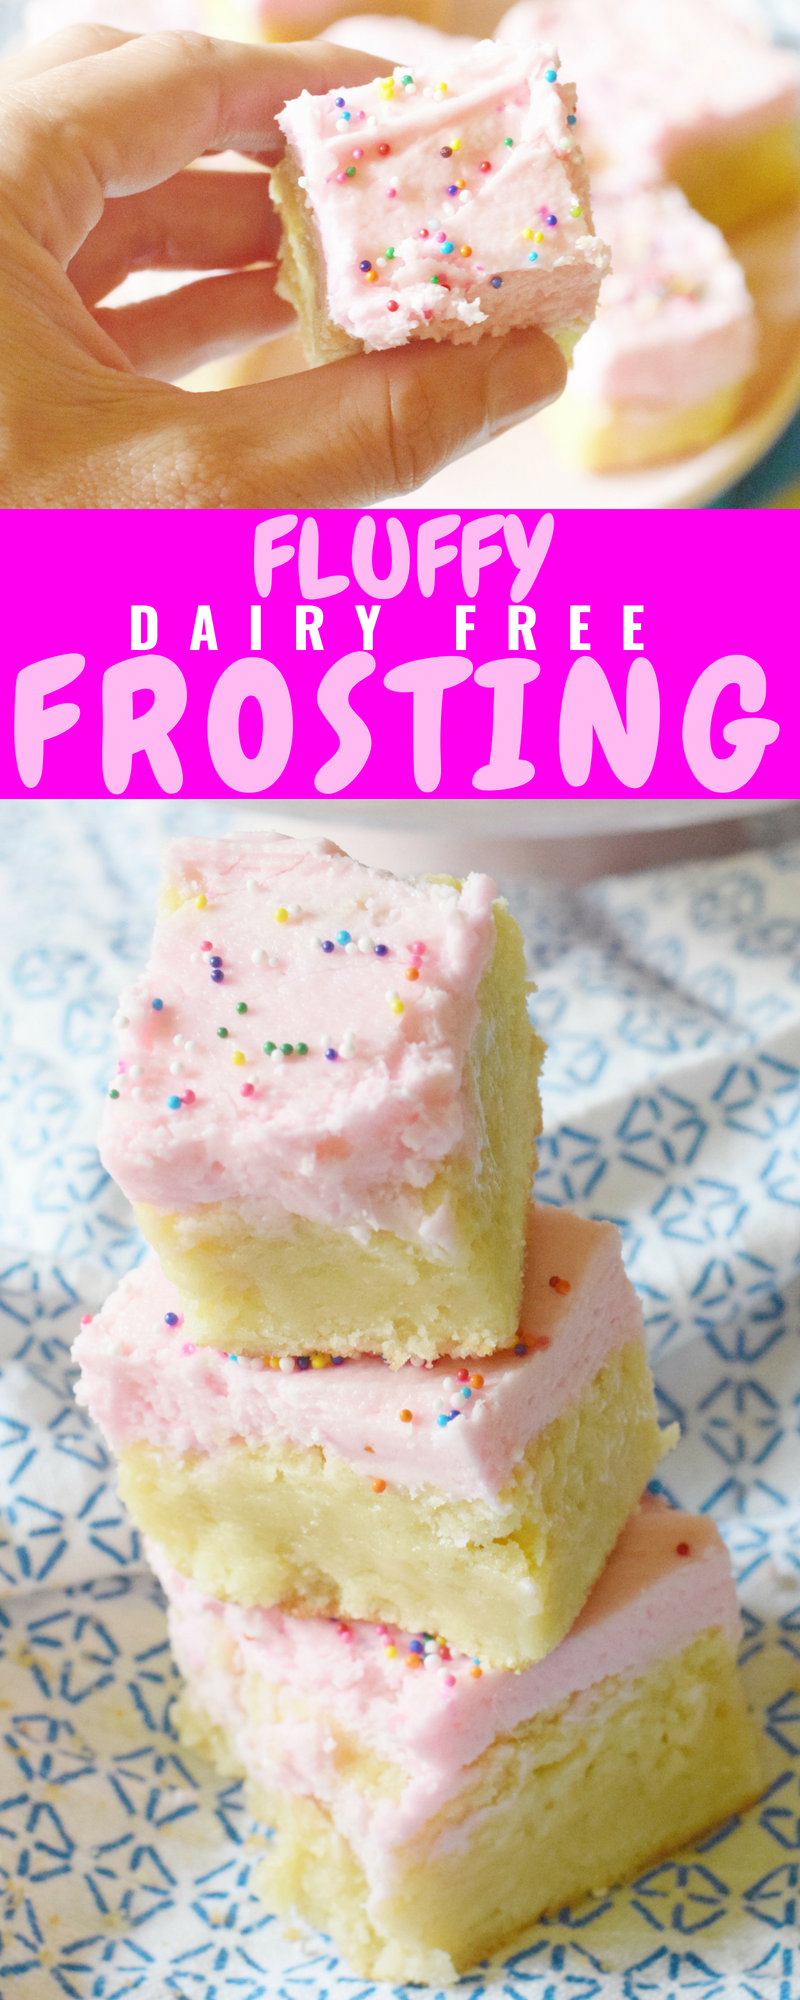 Dairy Free Frosting - dairy free frosting recipe - milk free frosting - dairy free chocolate frosting - dessert icing recipe - easy recipe - ghee frosting recipe - coconut milk frosting recipe - cake frosting - Communikait by Kait Hanson #glutenfree #dairyfree #dessert #frosting #icing #recipe #frostingrecipe #dairyfreefrosting #fluffyfrosting